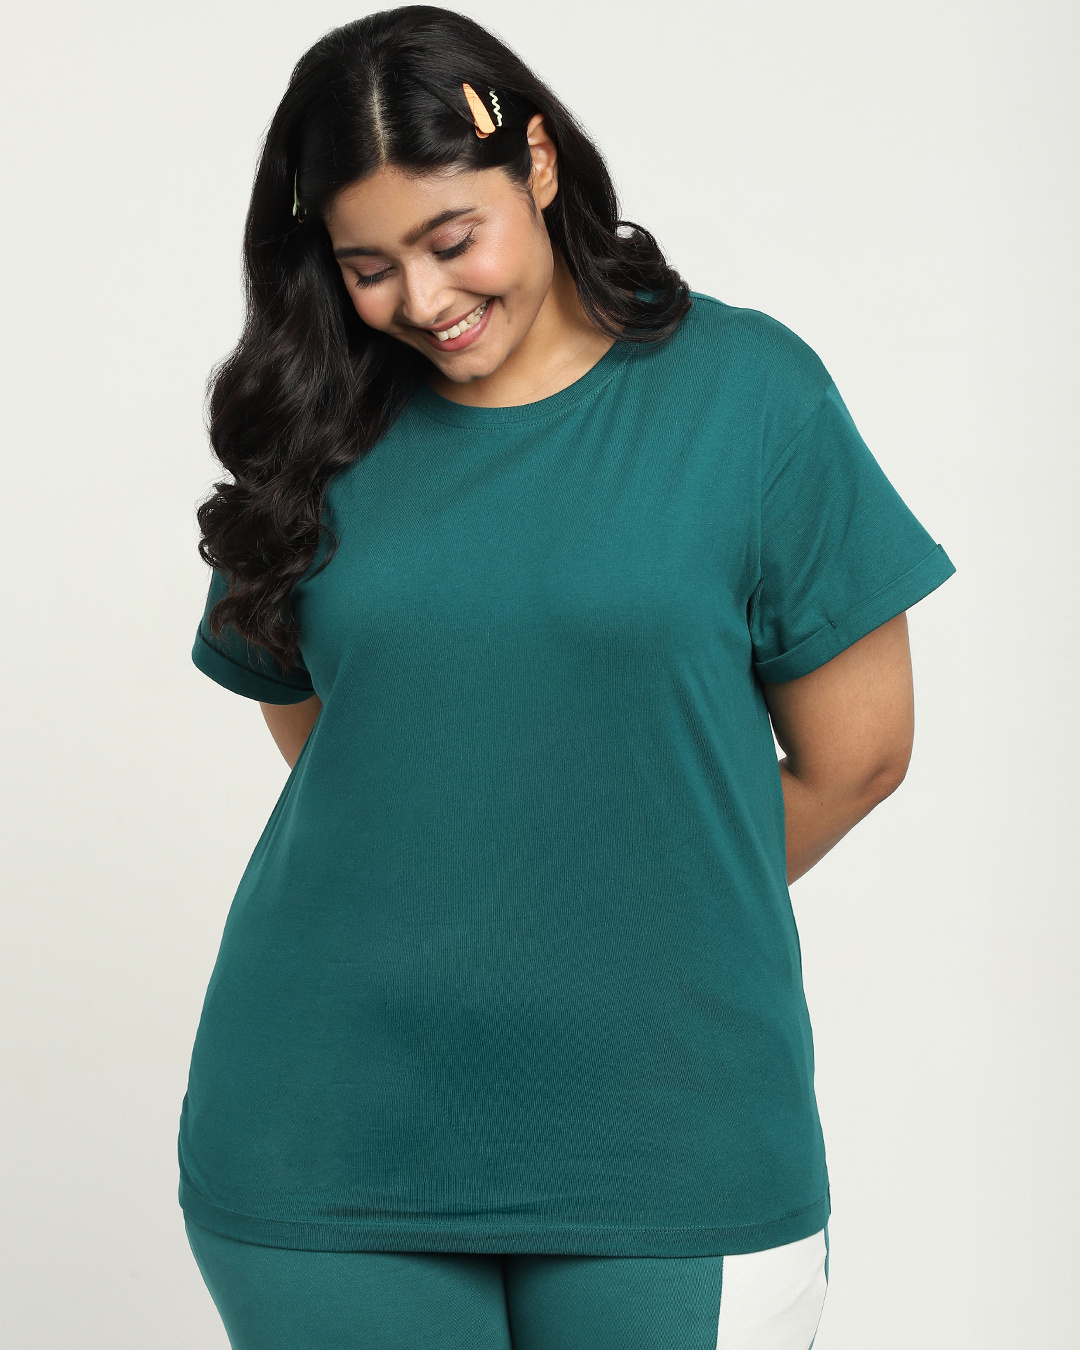 Shop Snazzy Green Plus Size Boyfriend T-shirt For Women's-Back